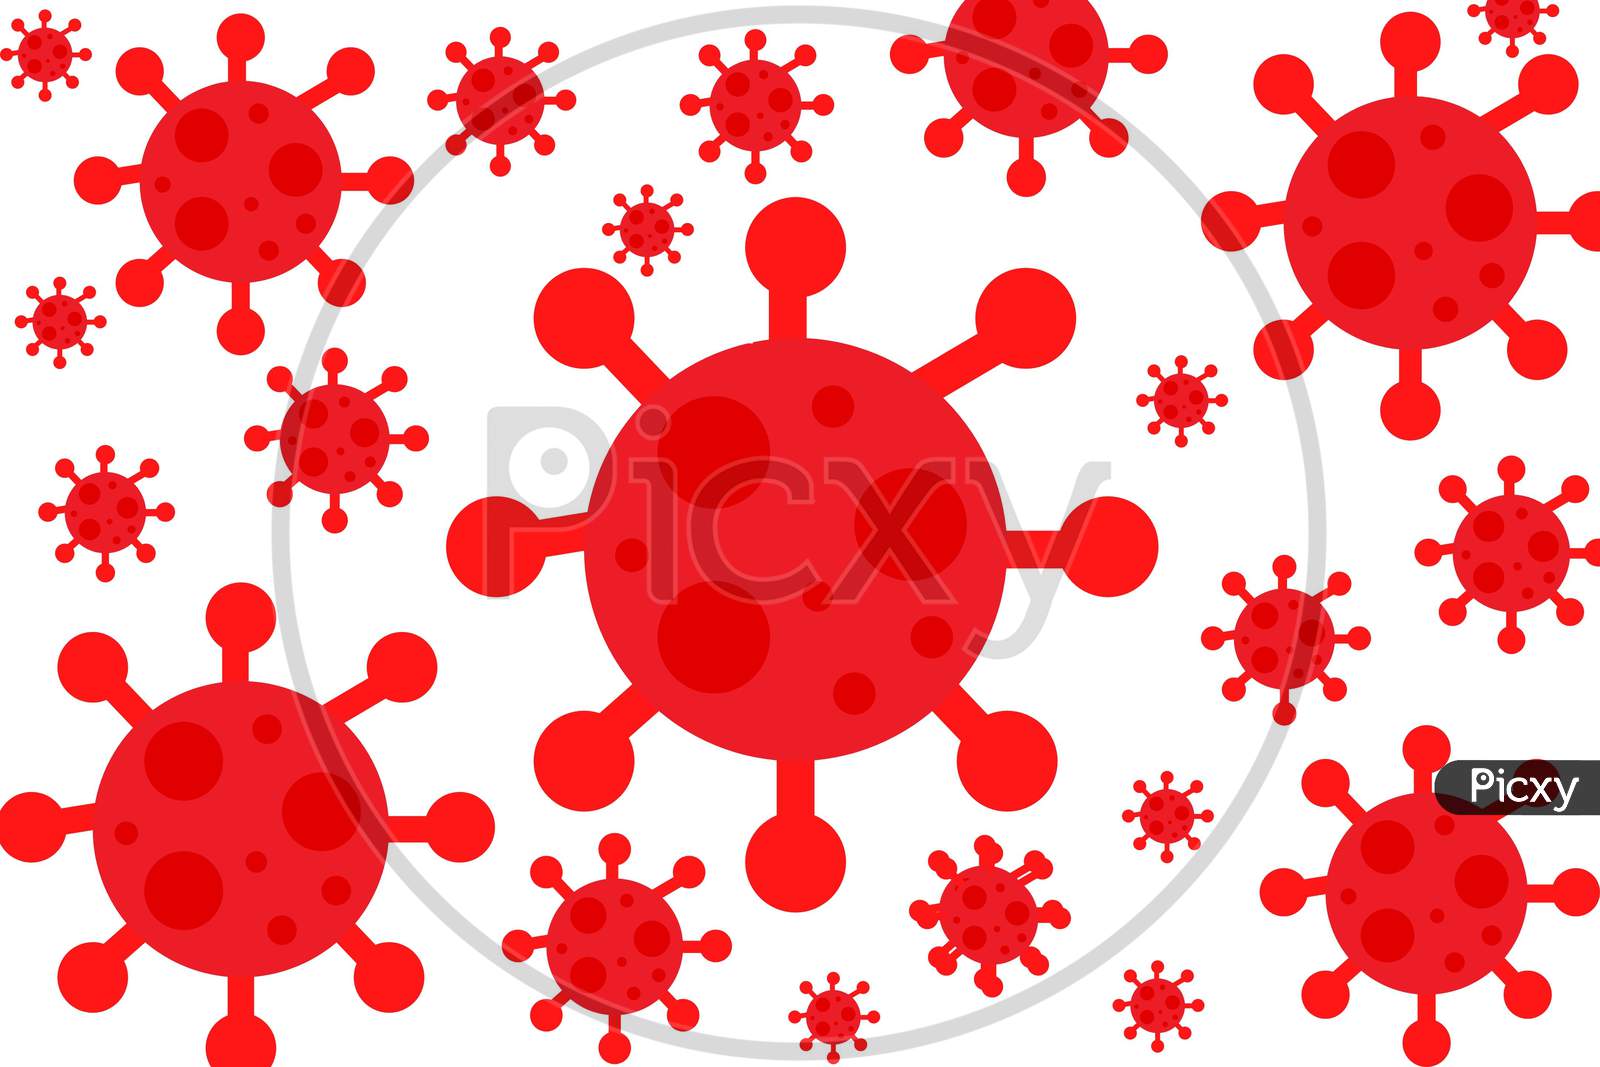 Coronavirus or  COVID-19 background  illustration